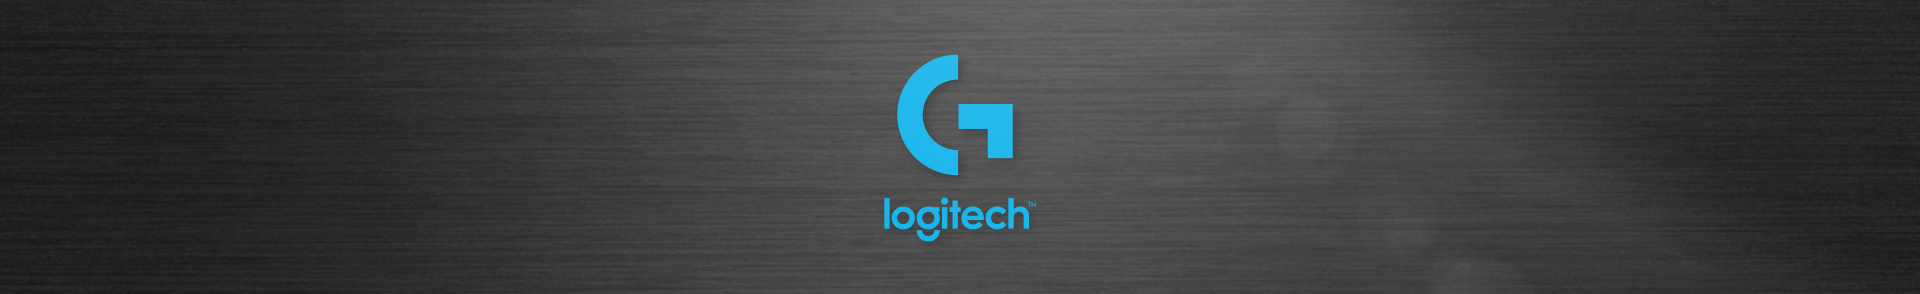 logitech-g-logo-banner